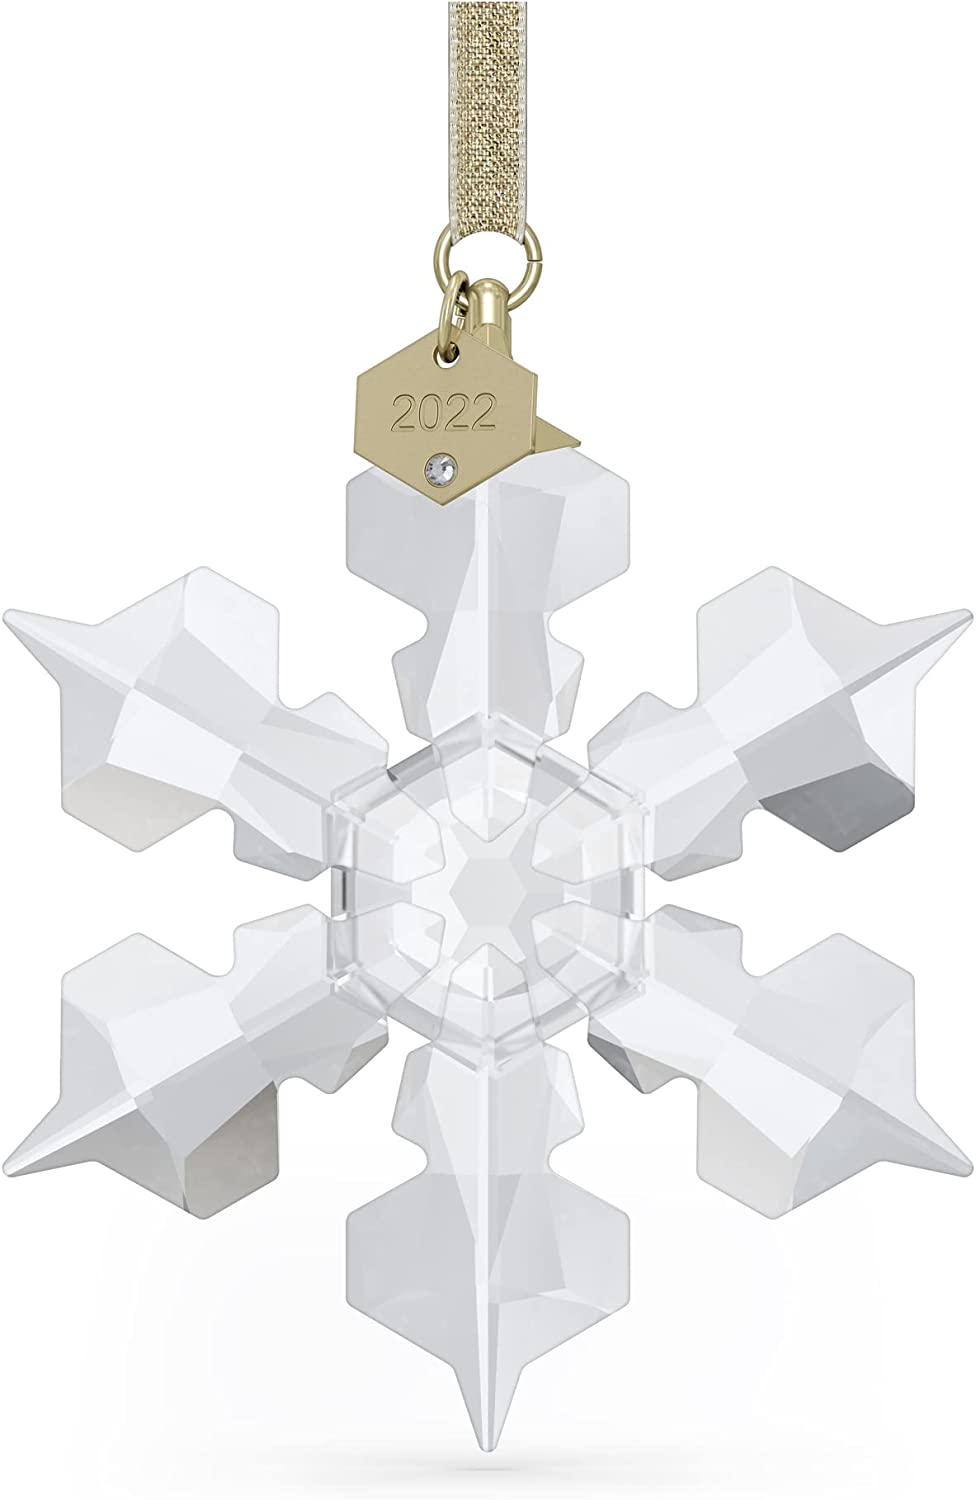 Swarovski 2022 Annual Edition Snowflake Ornament with Champagne Gold Tone Finish Metal